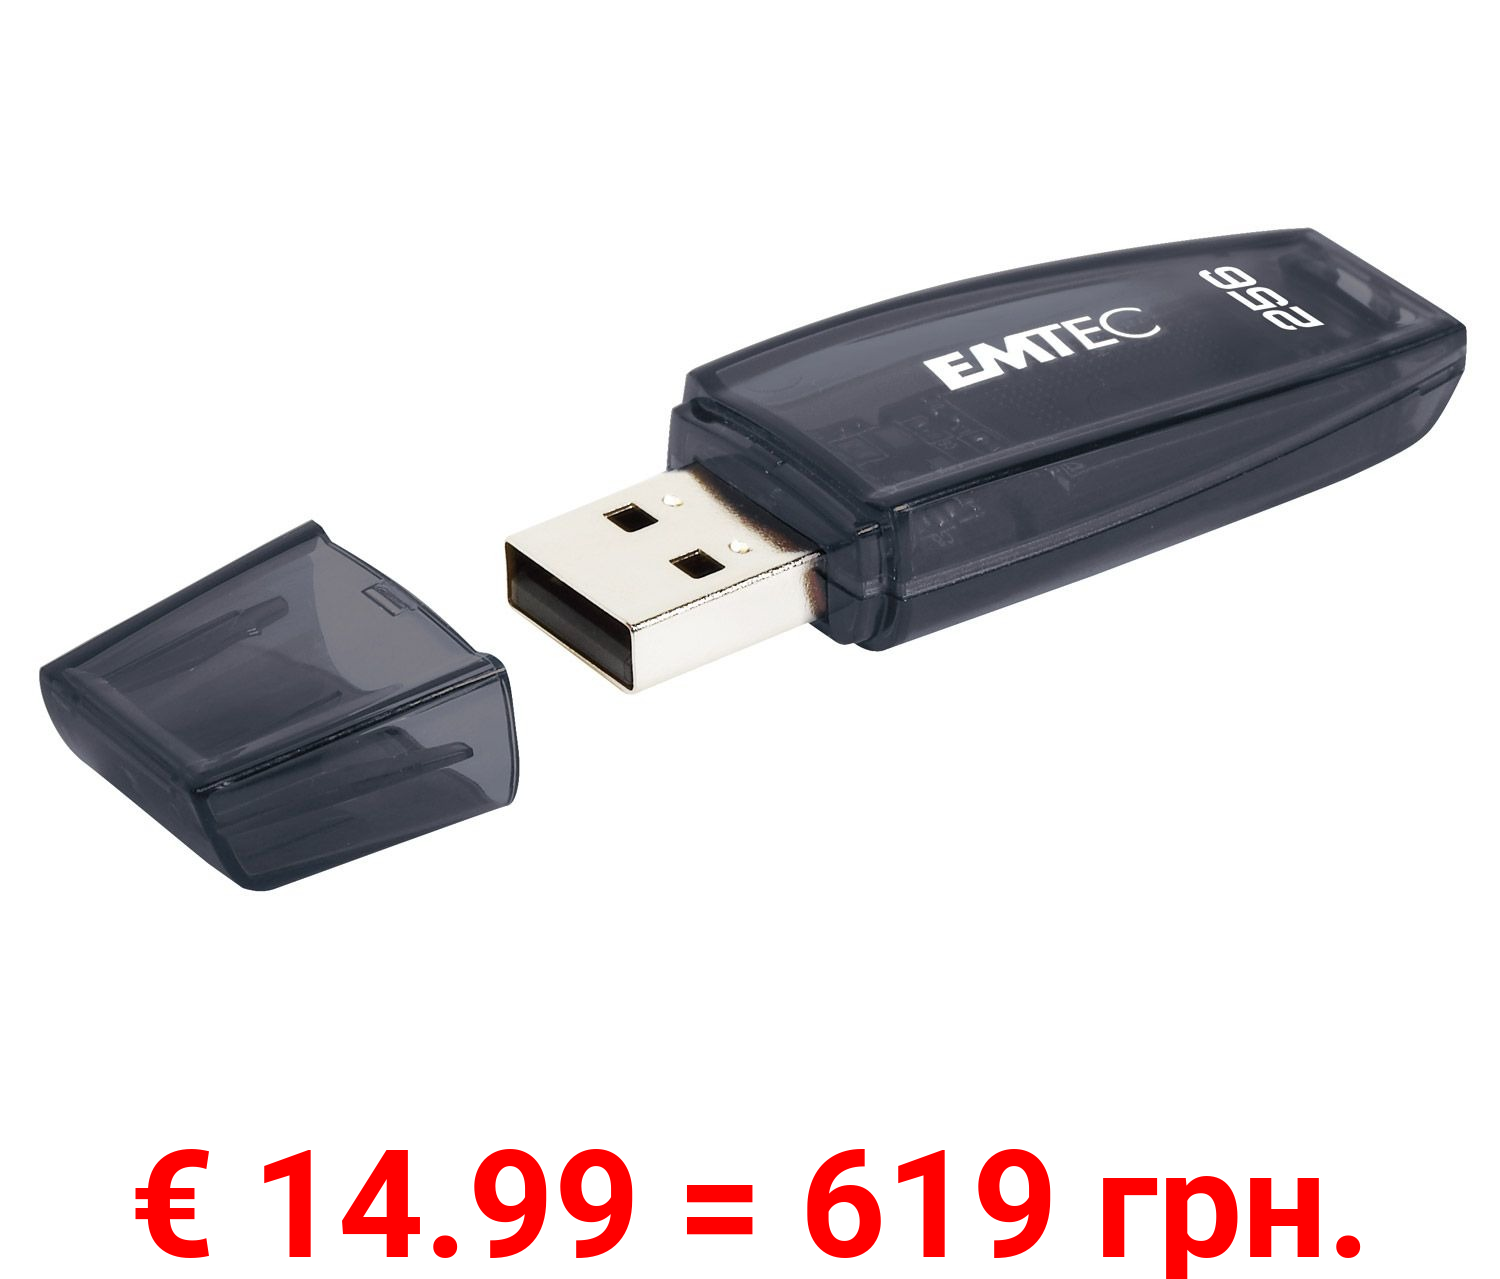 Emtec USB 3.0 Stick C410 256GB